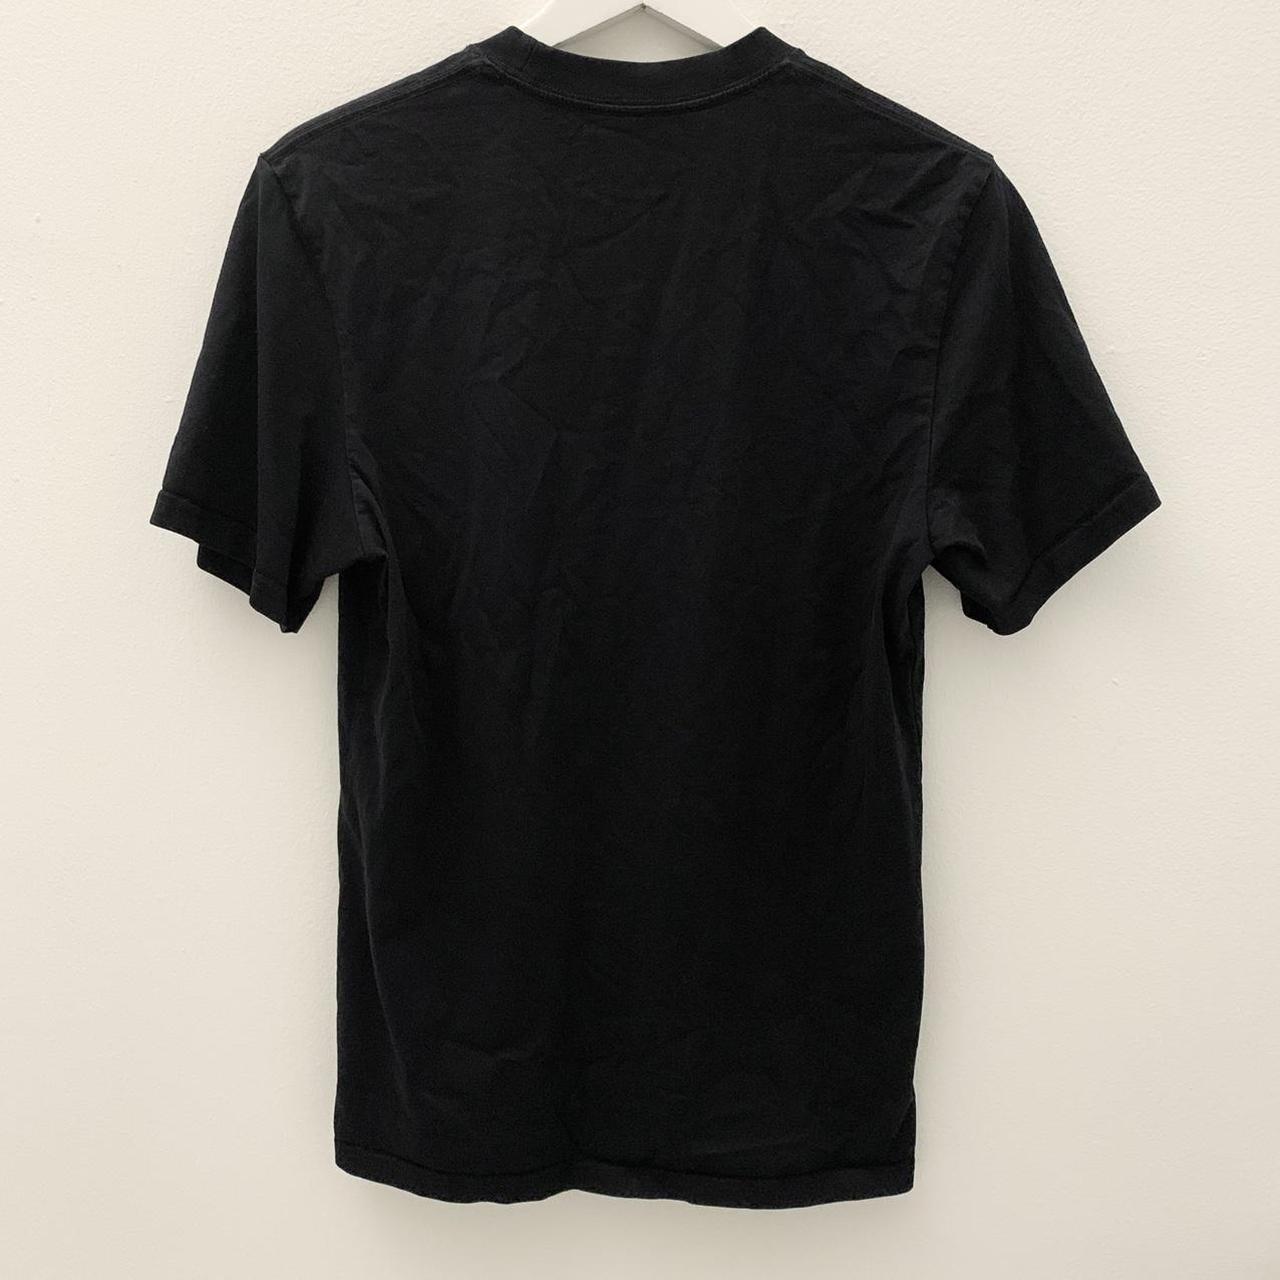 Product Image 2 - Martine Rose Black T-Shirt

Men’s XS